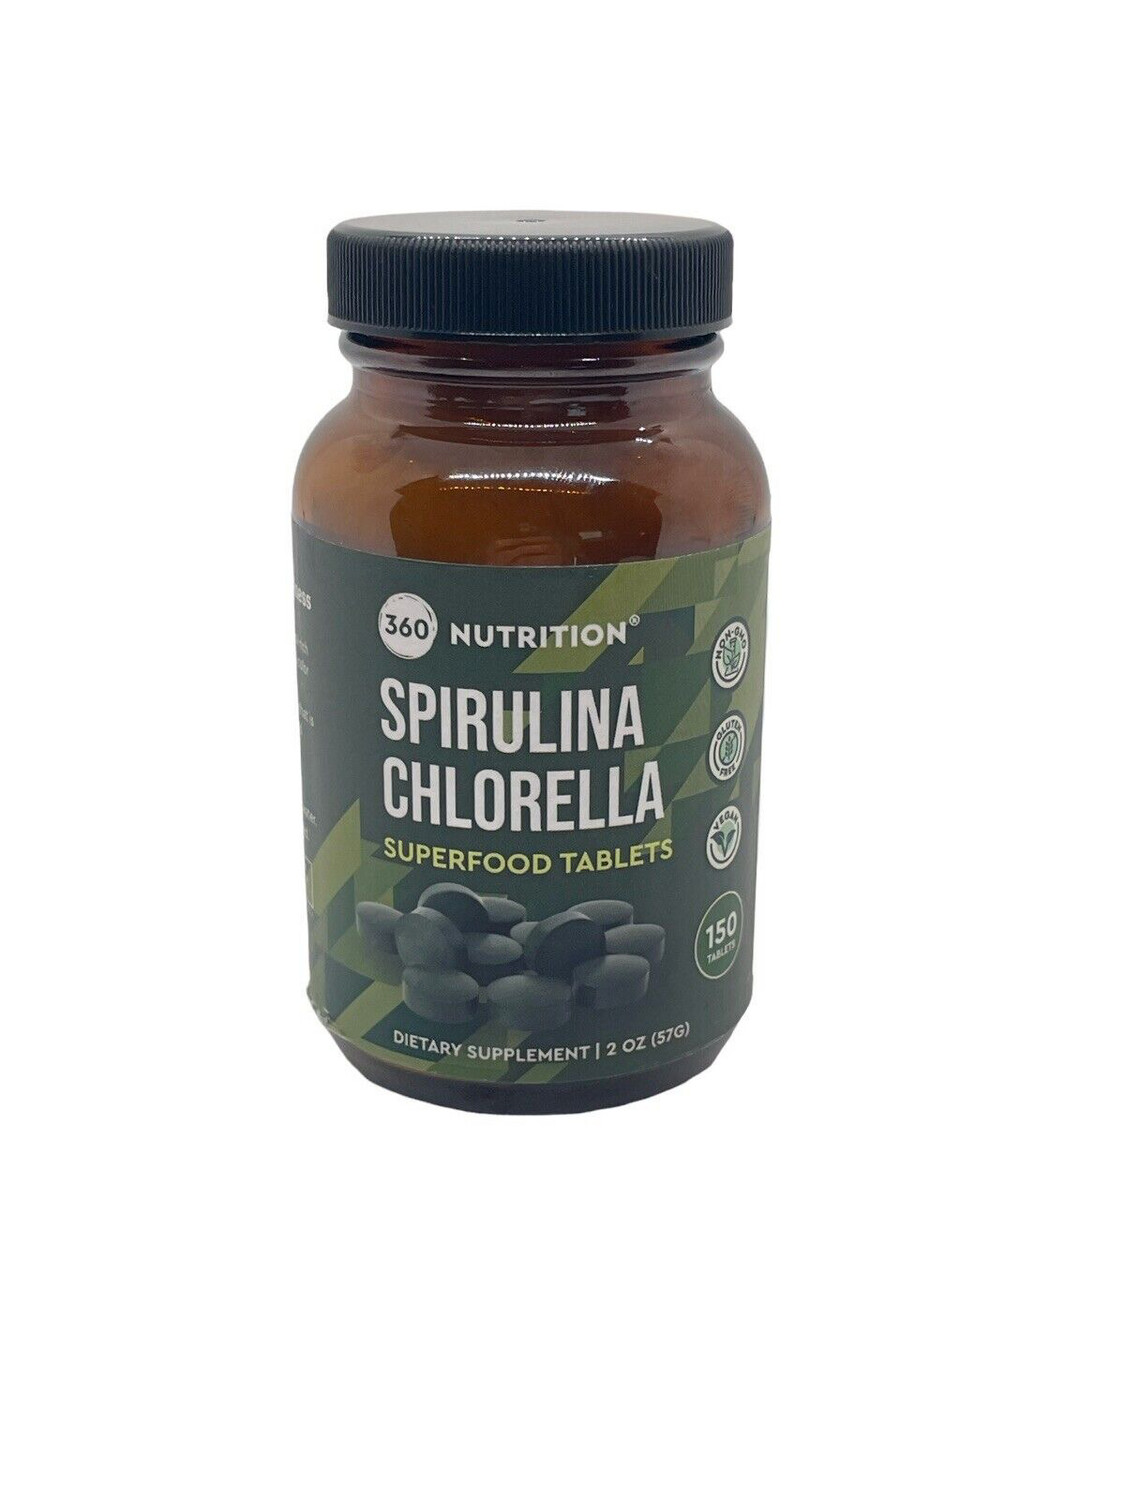 360 Nutrition Spirulina Chlorella Superfood 150 tablets 